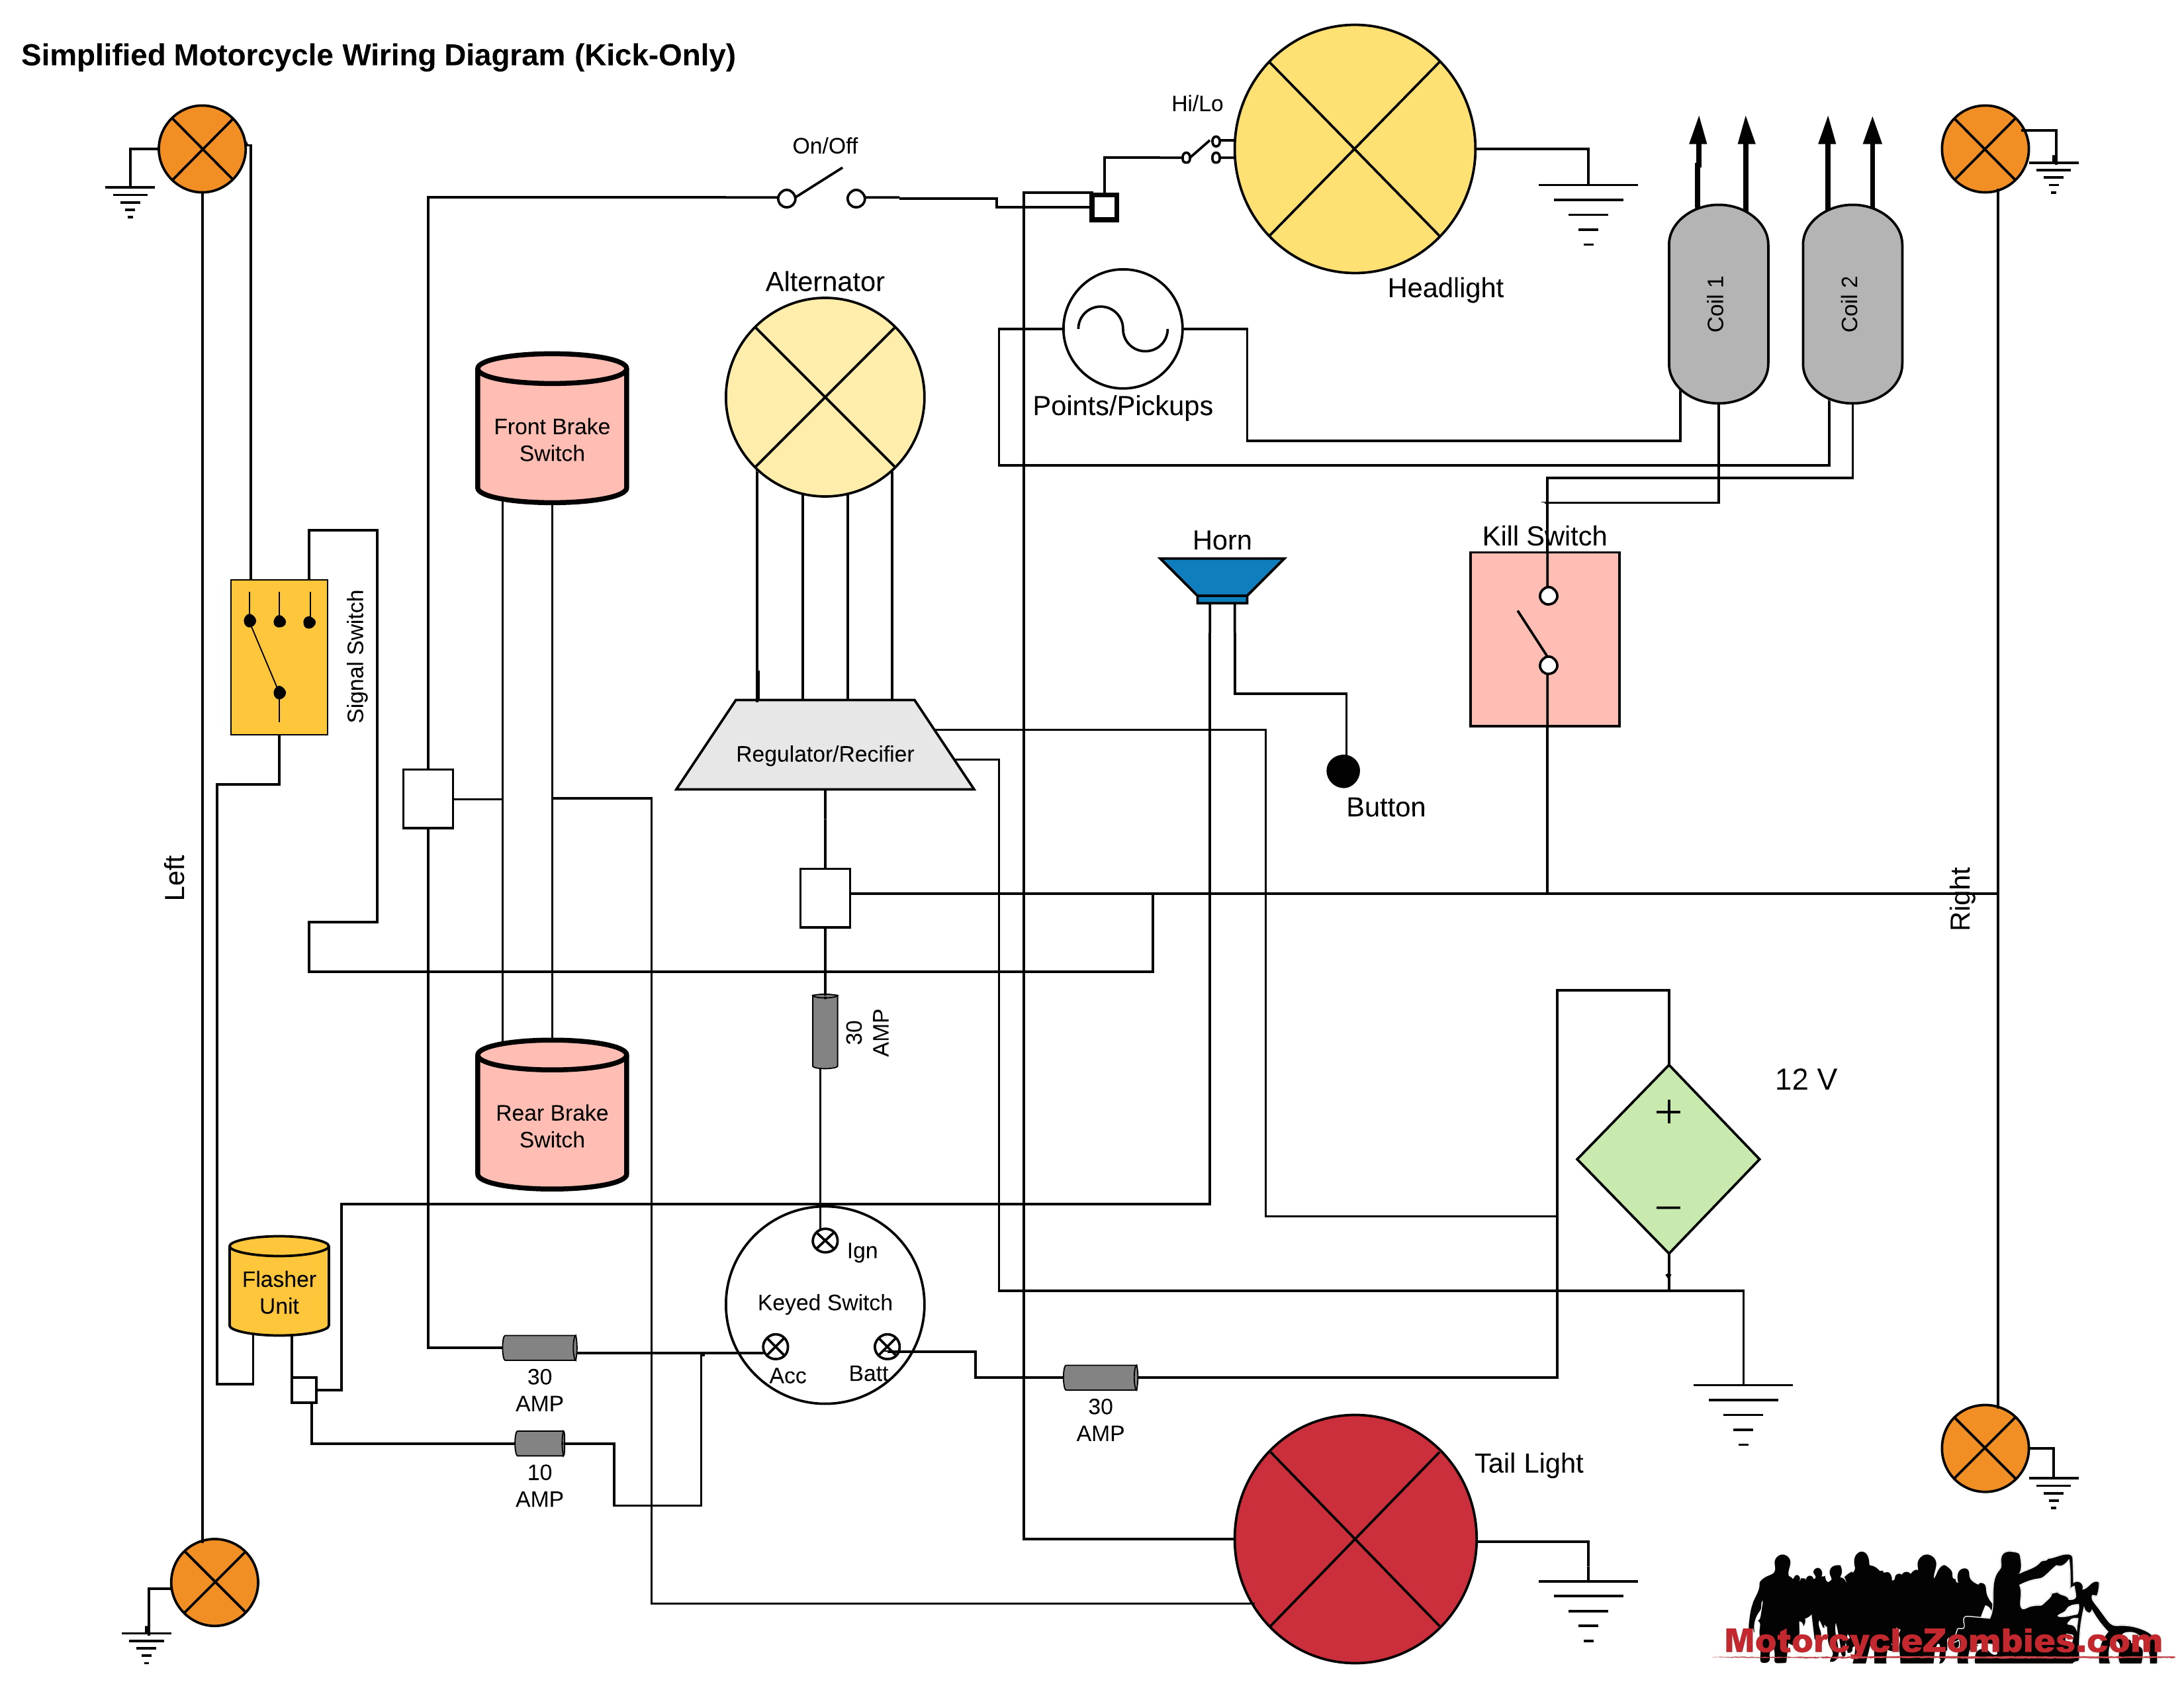 simplified motorcycle wiring harness motorcyclezombies com simplified kick only motorcycle wiring diagram